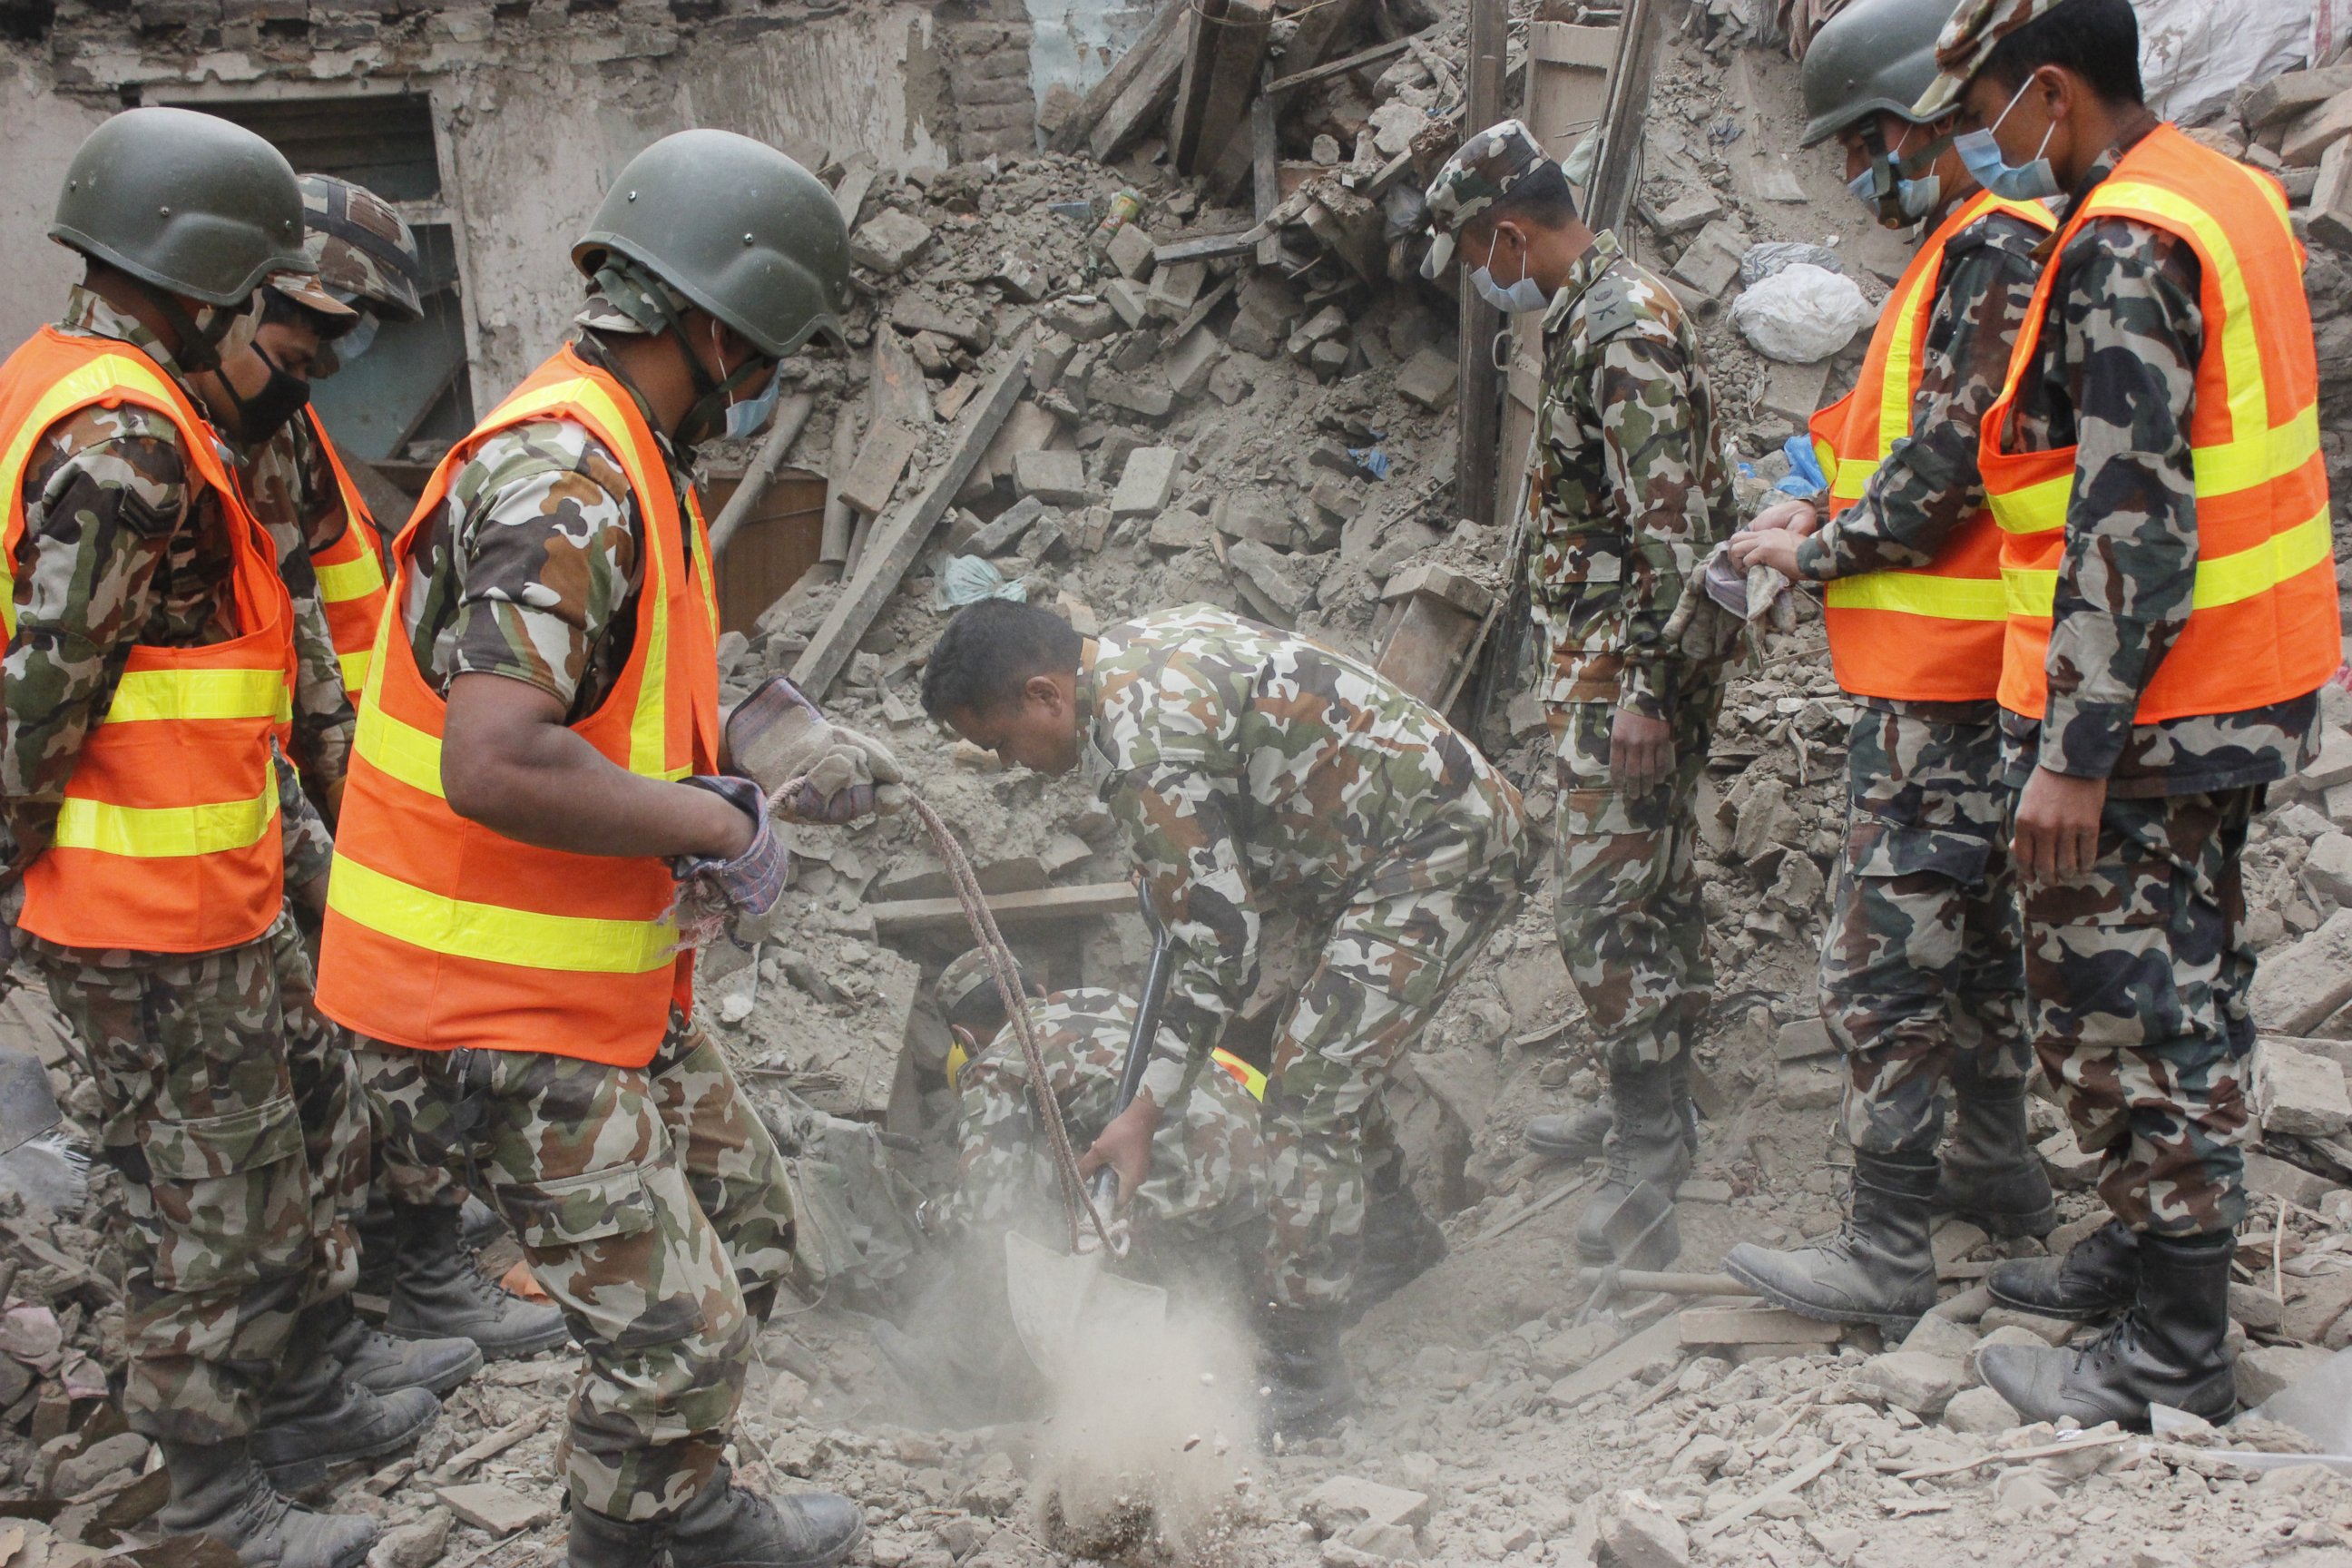 Tragic Earthquake Devastation In Nepal Photos Image 131 Abc News